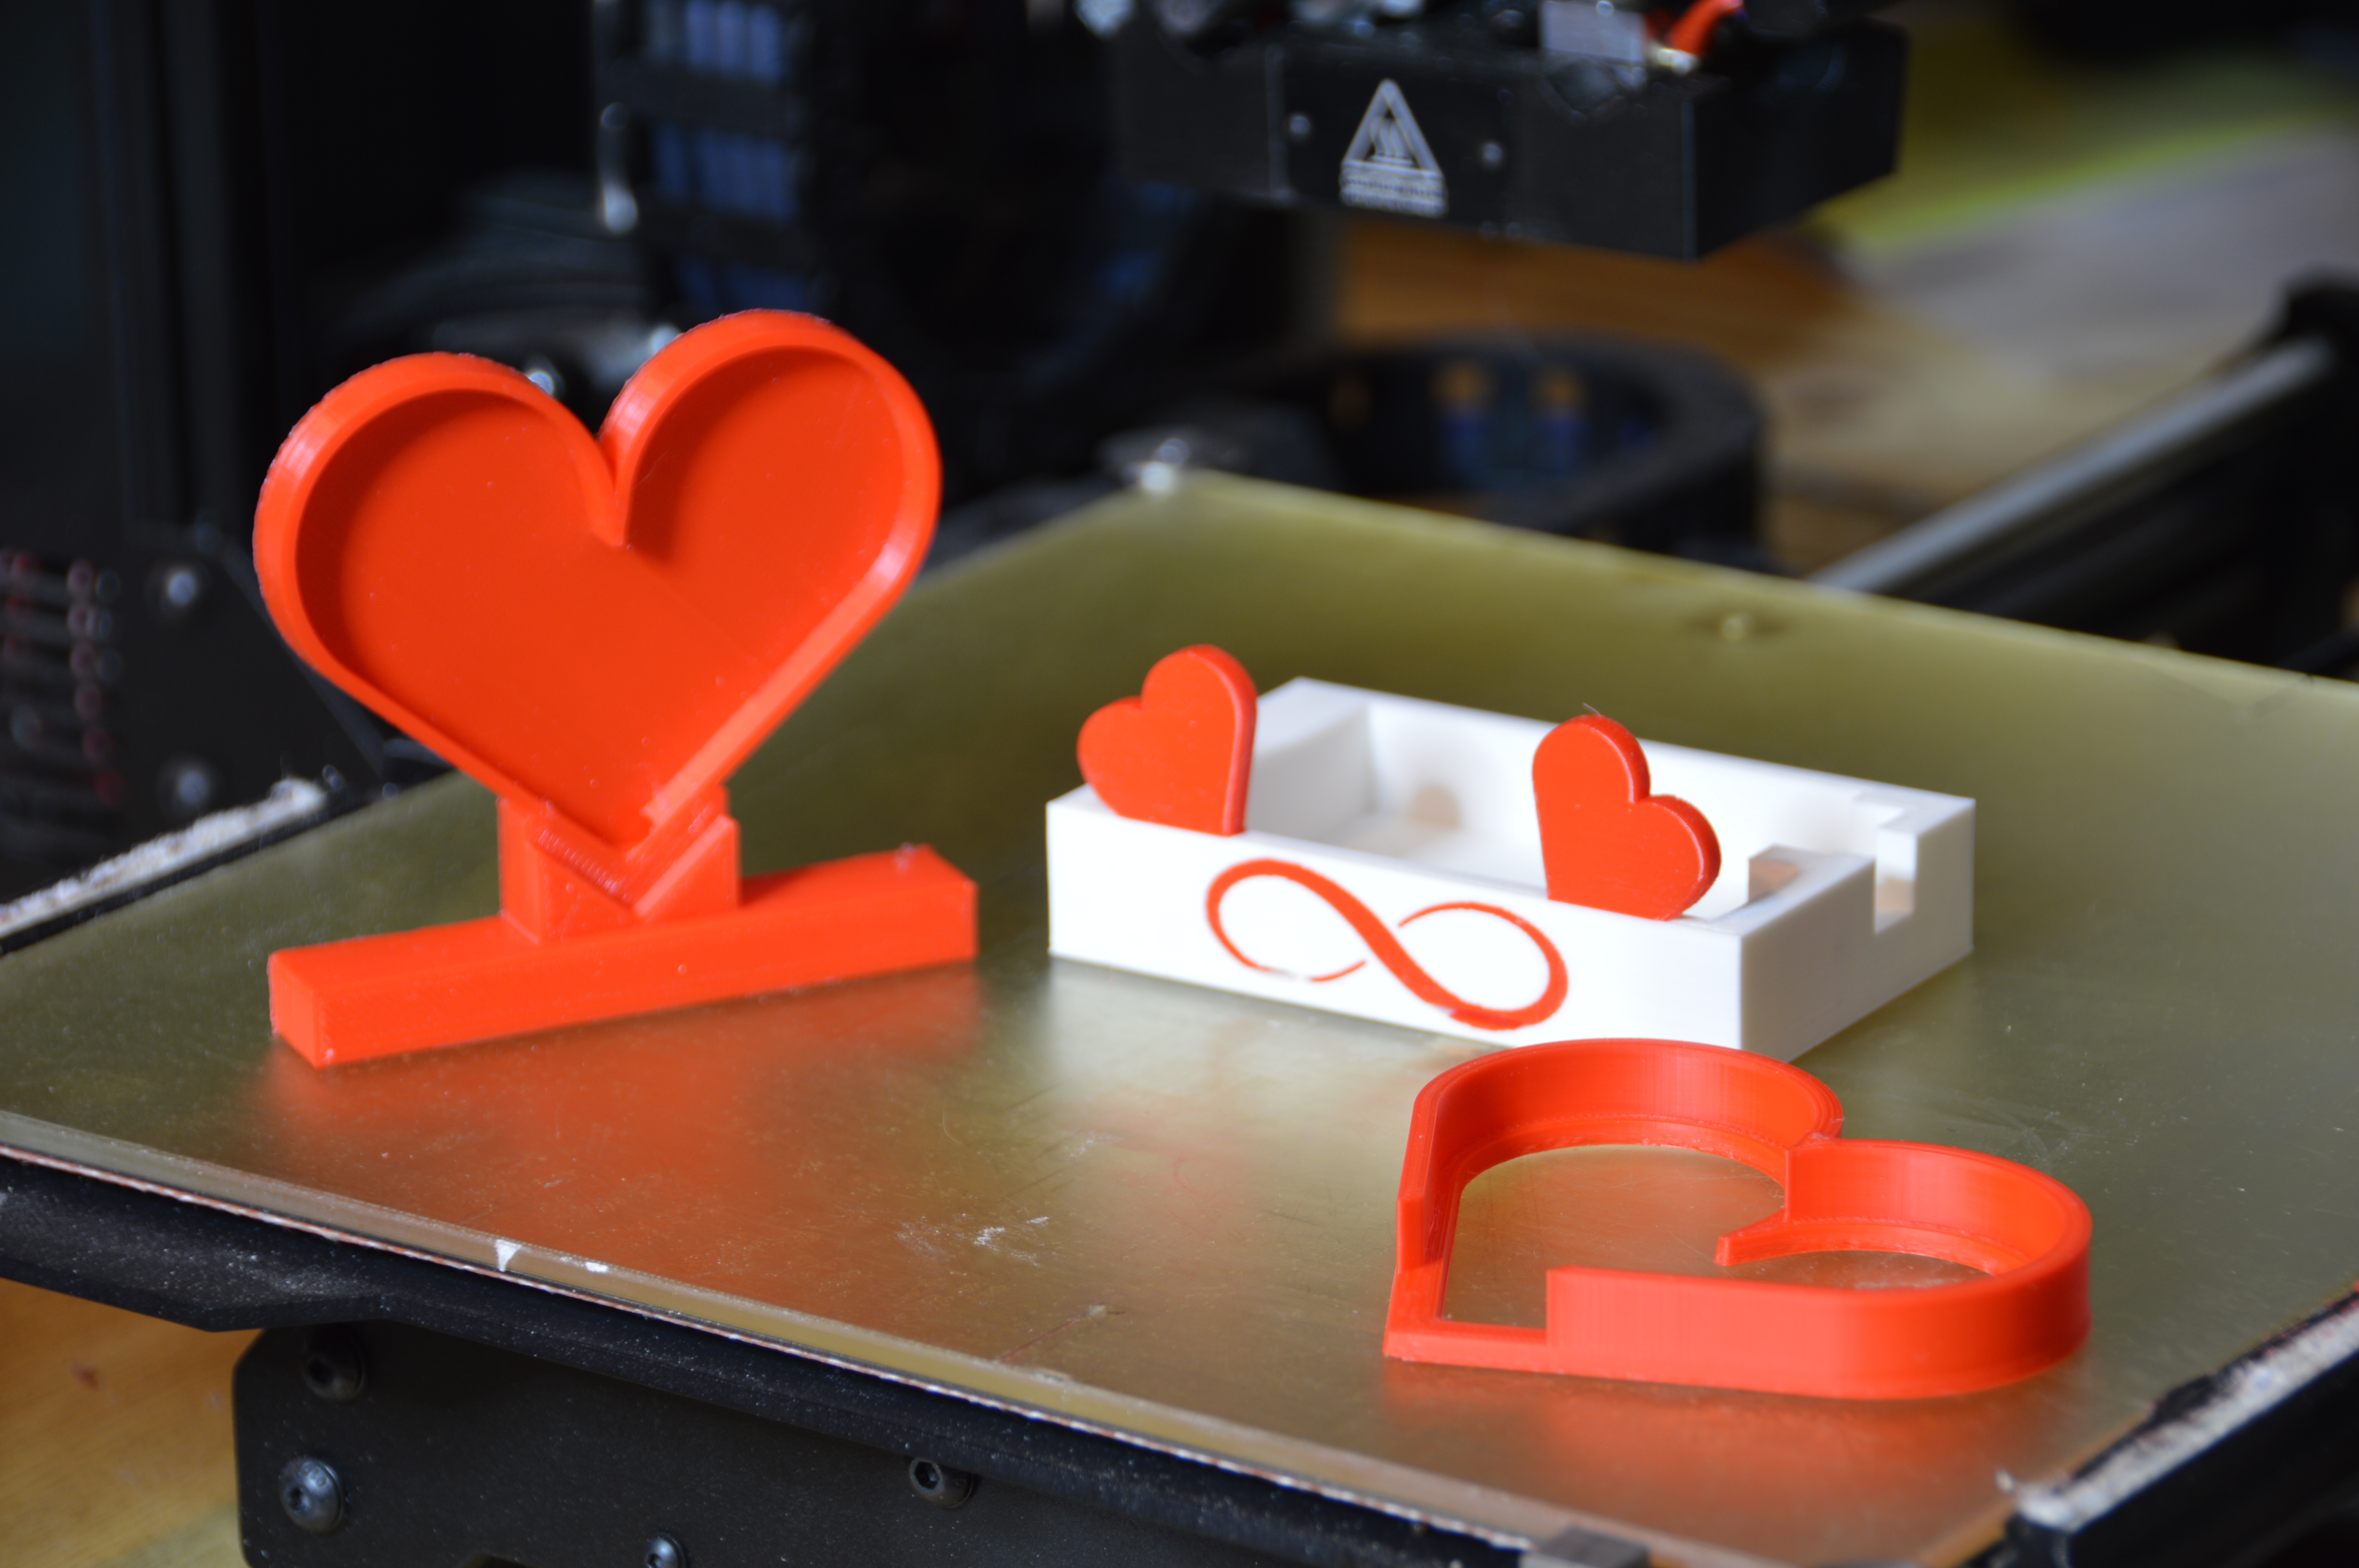 Enginursday: Light Up Your 3D Printer's Bed - News - SparkFun